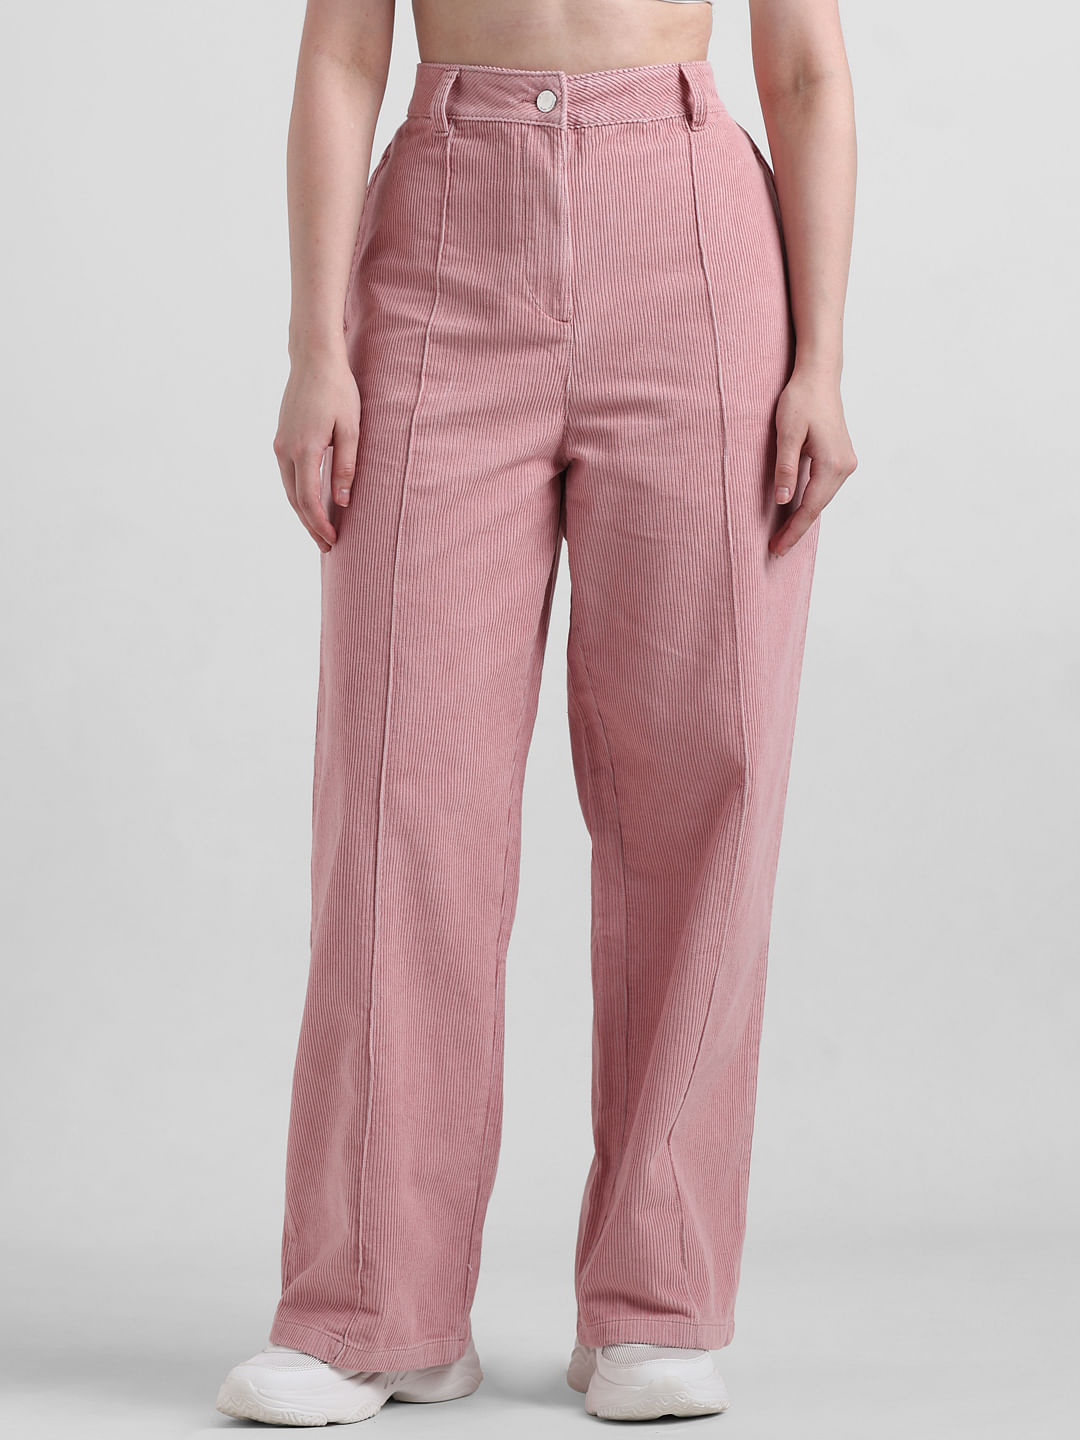 Zara Pink High Waisted Wide Leg Pant with Cuff | High waisted wide leg  pants, Wide leg pants, Clothes design